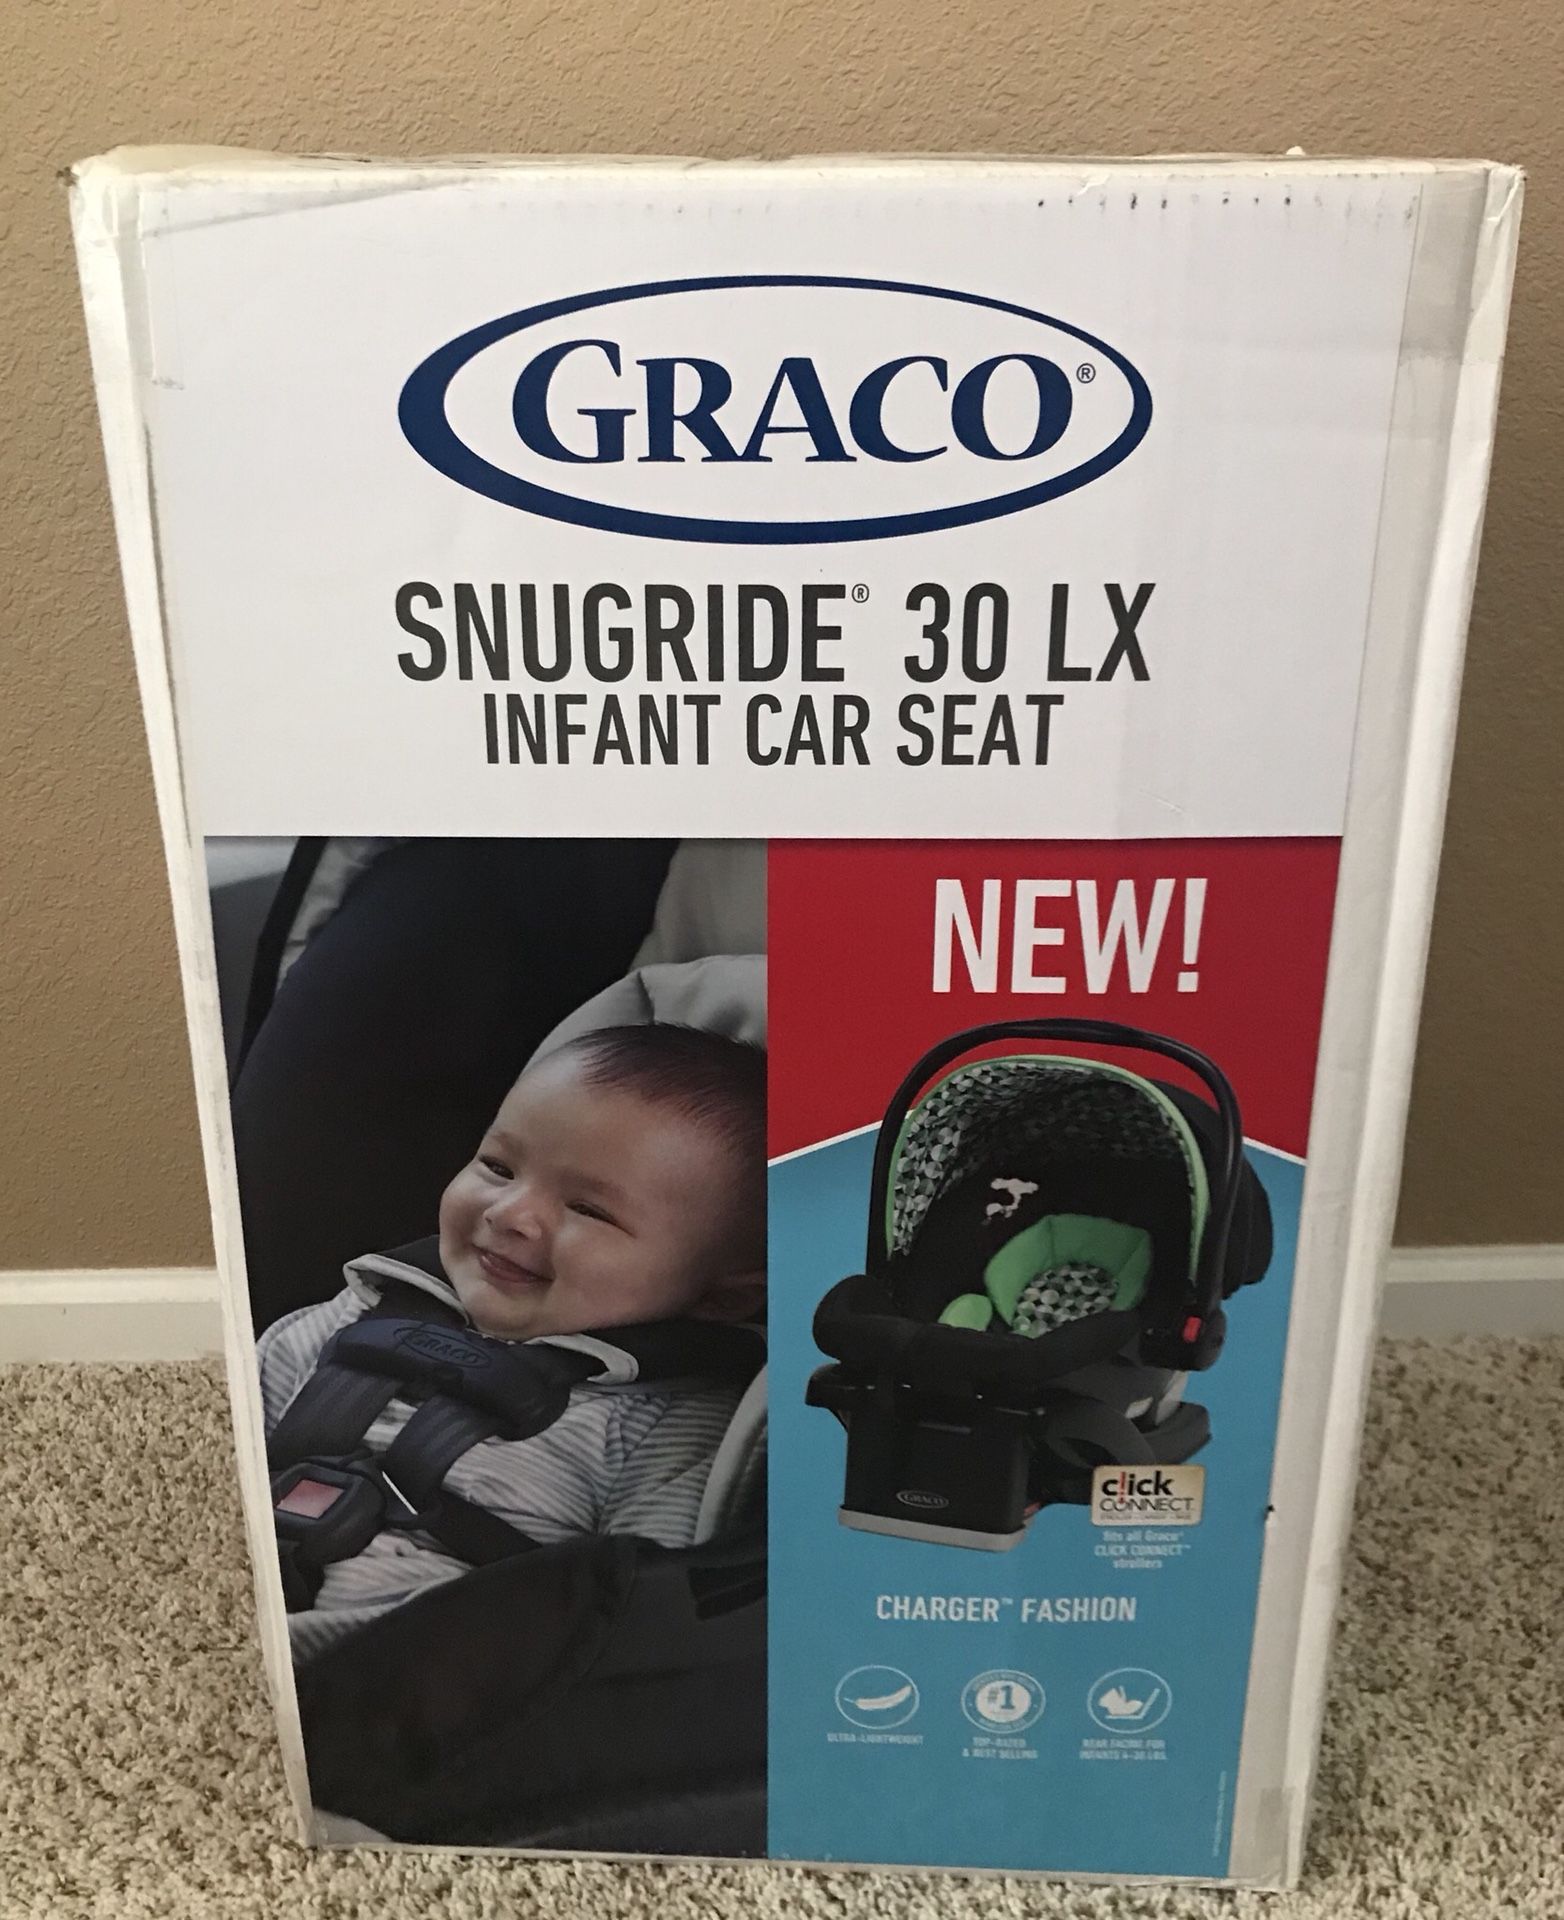 NEW Graco Snugride 30 LX Infant Car Seat